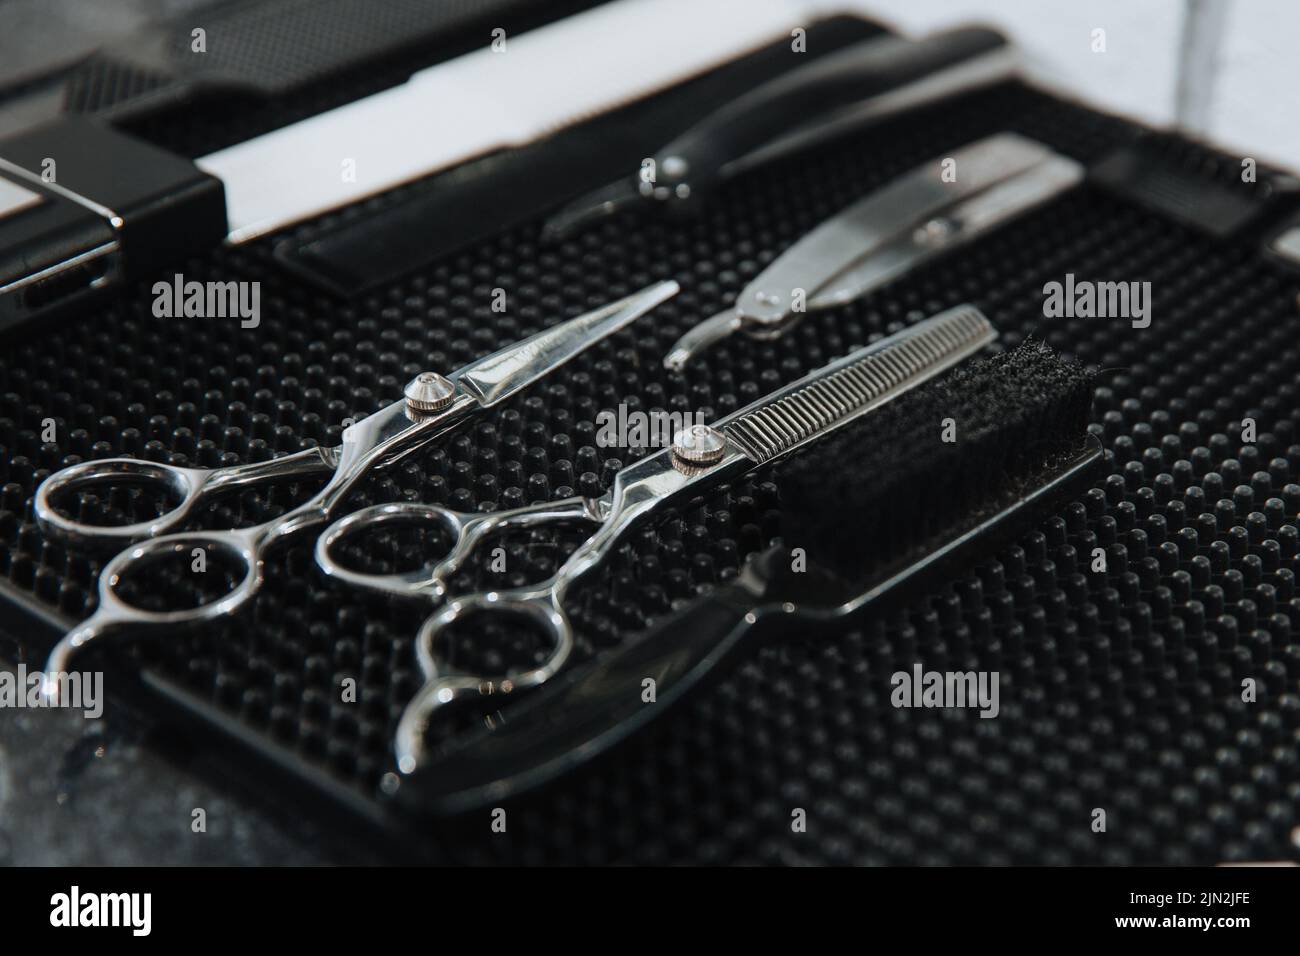 Professional scissors on black background. Hairdressing industry. Professional hairdressing tools. Stock Photo